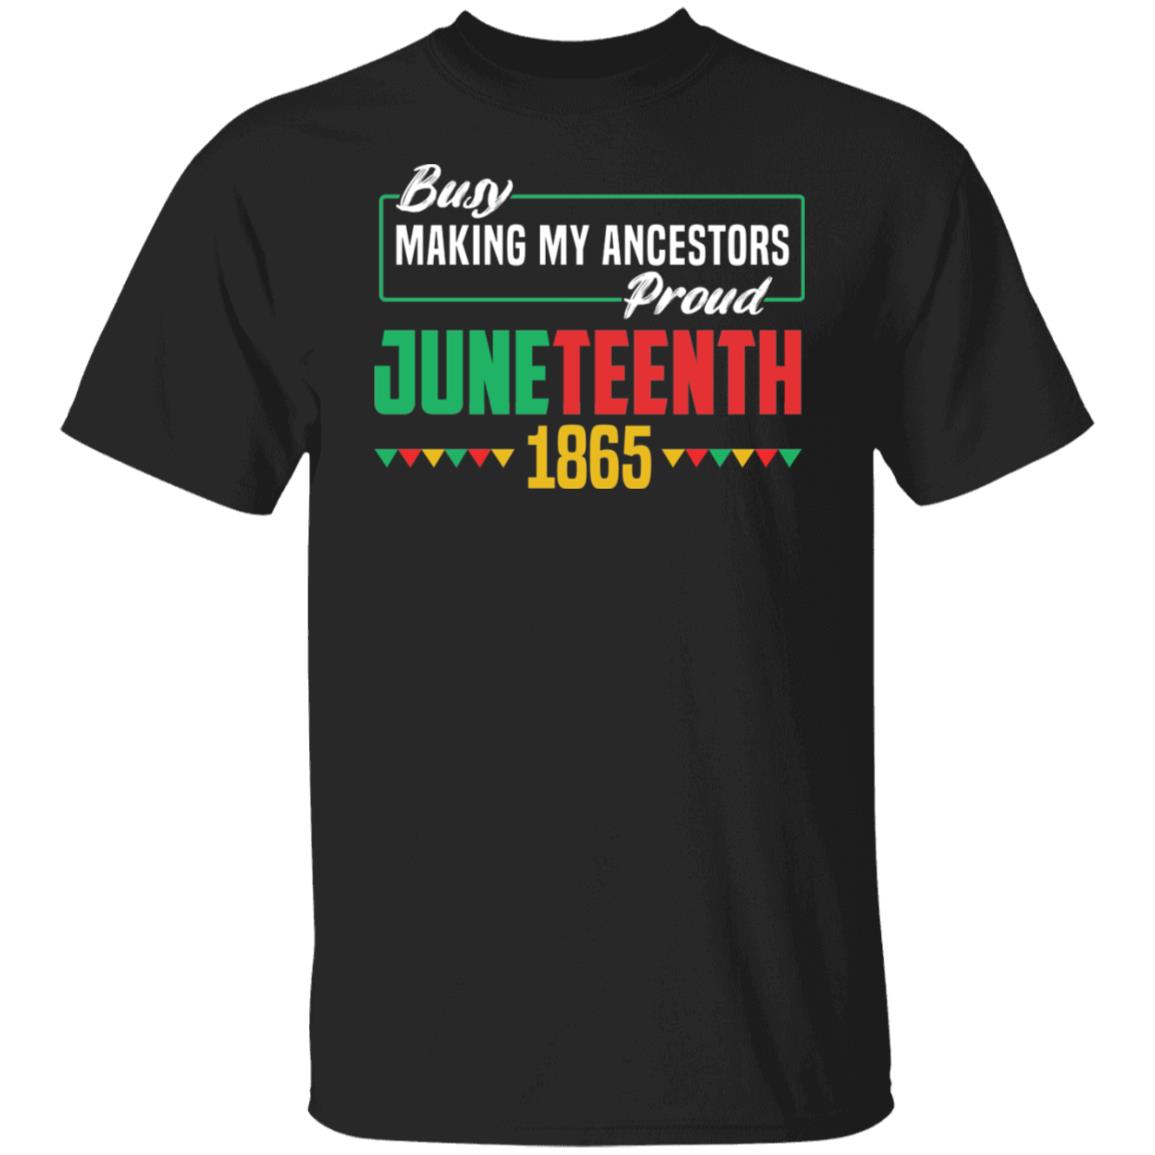 Busy Making My Ancestors Proud - Juneteenth T-shirt Apparel Gearment Unisex Tee Black S